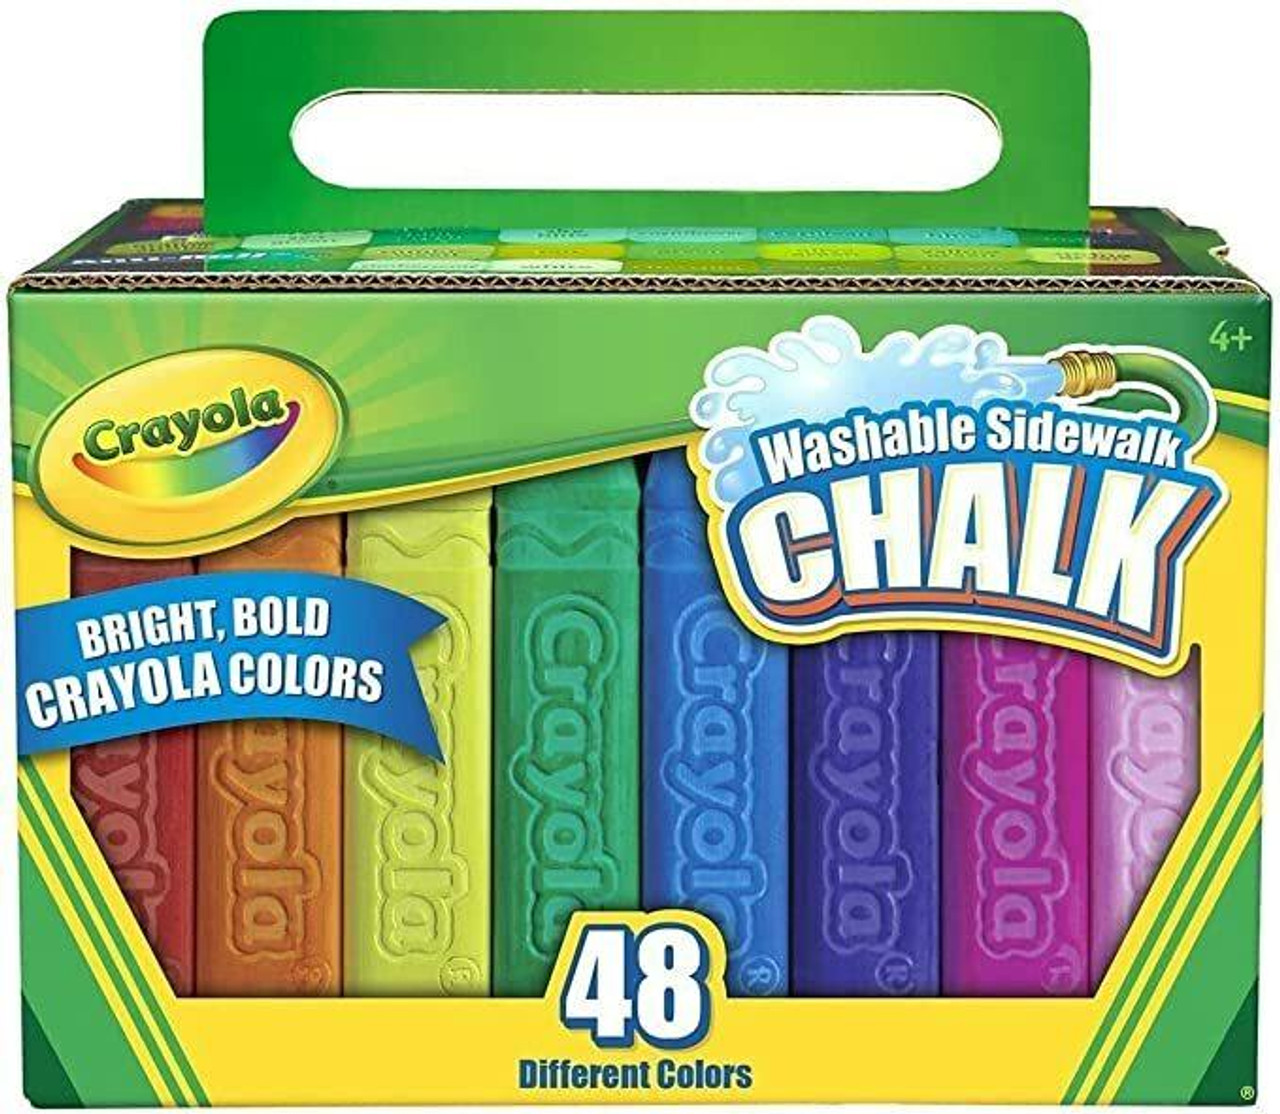 LIQUI-MARK Sidewalk Chalk Box Set - 16 Assorted Colors - Roll Proof Design